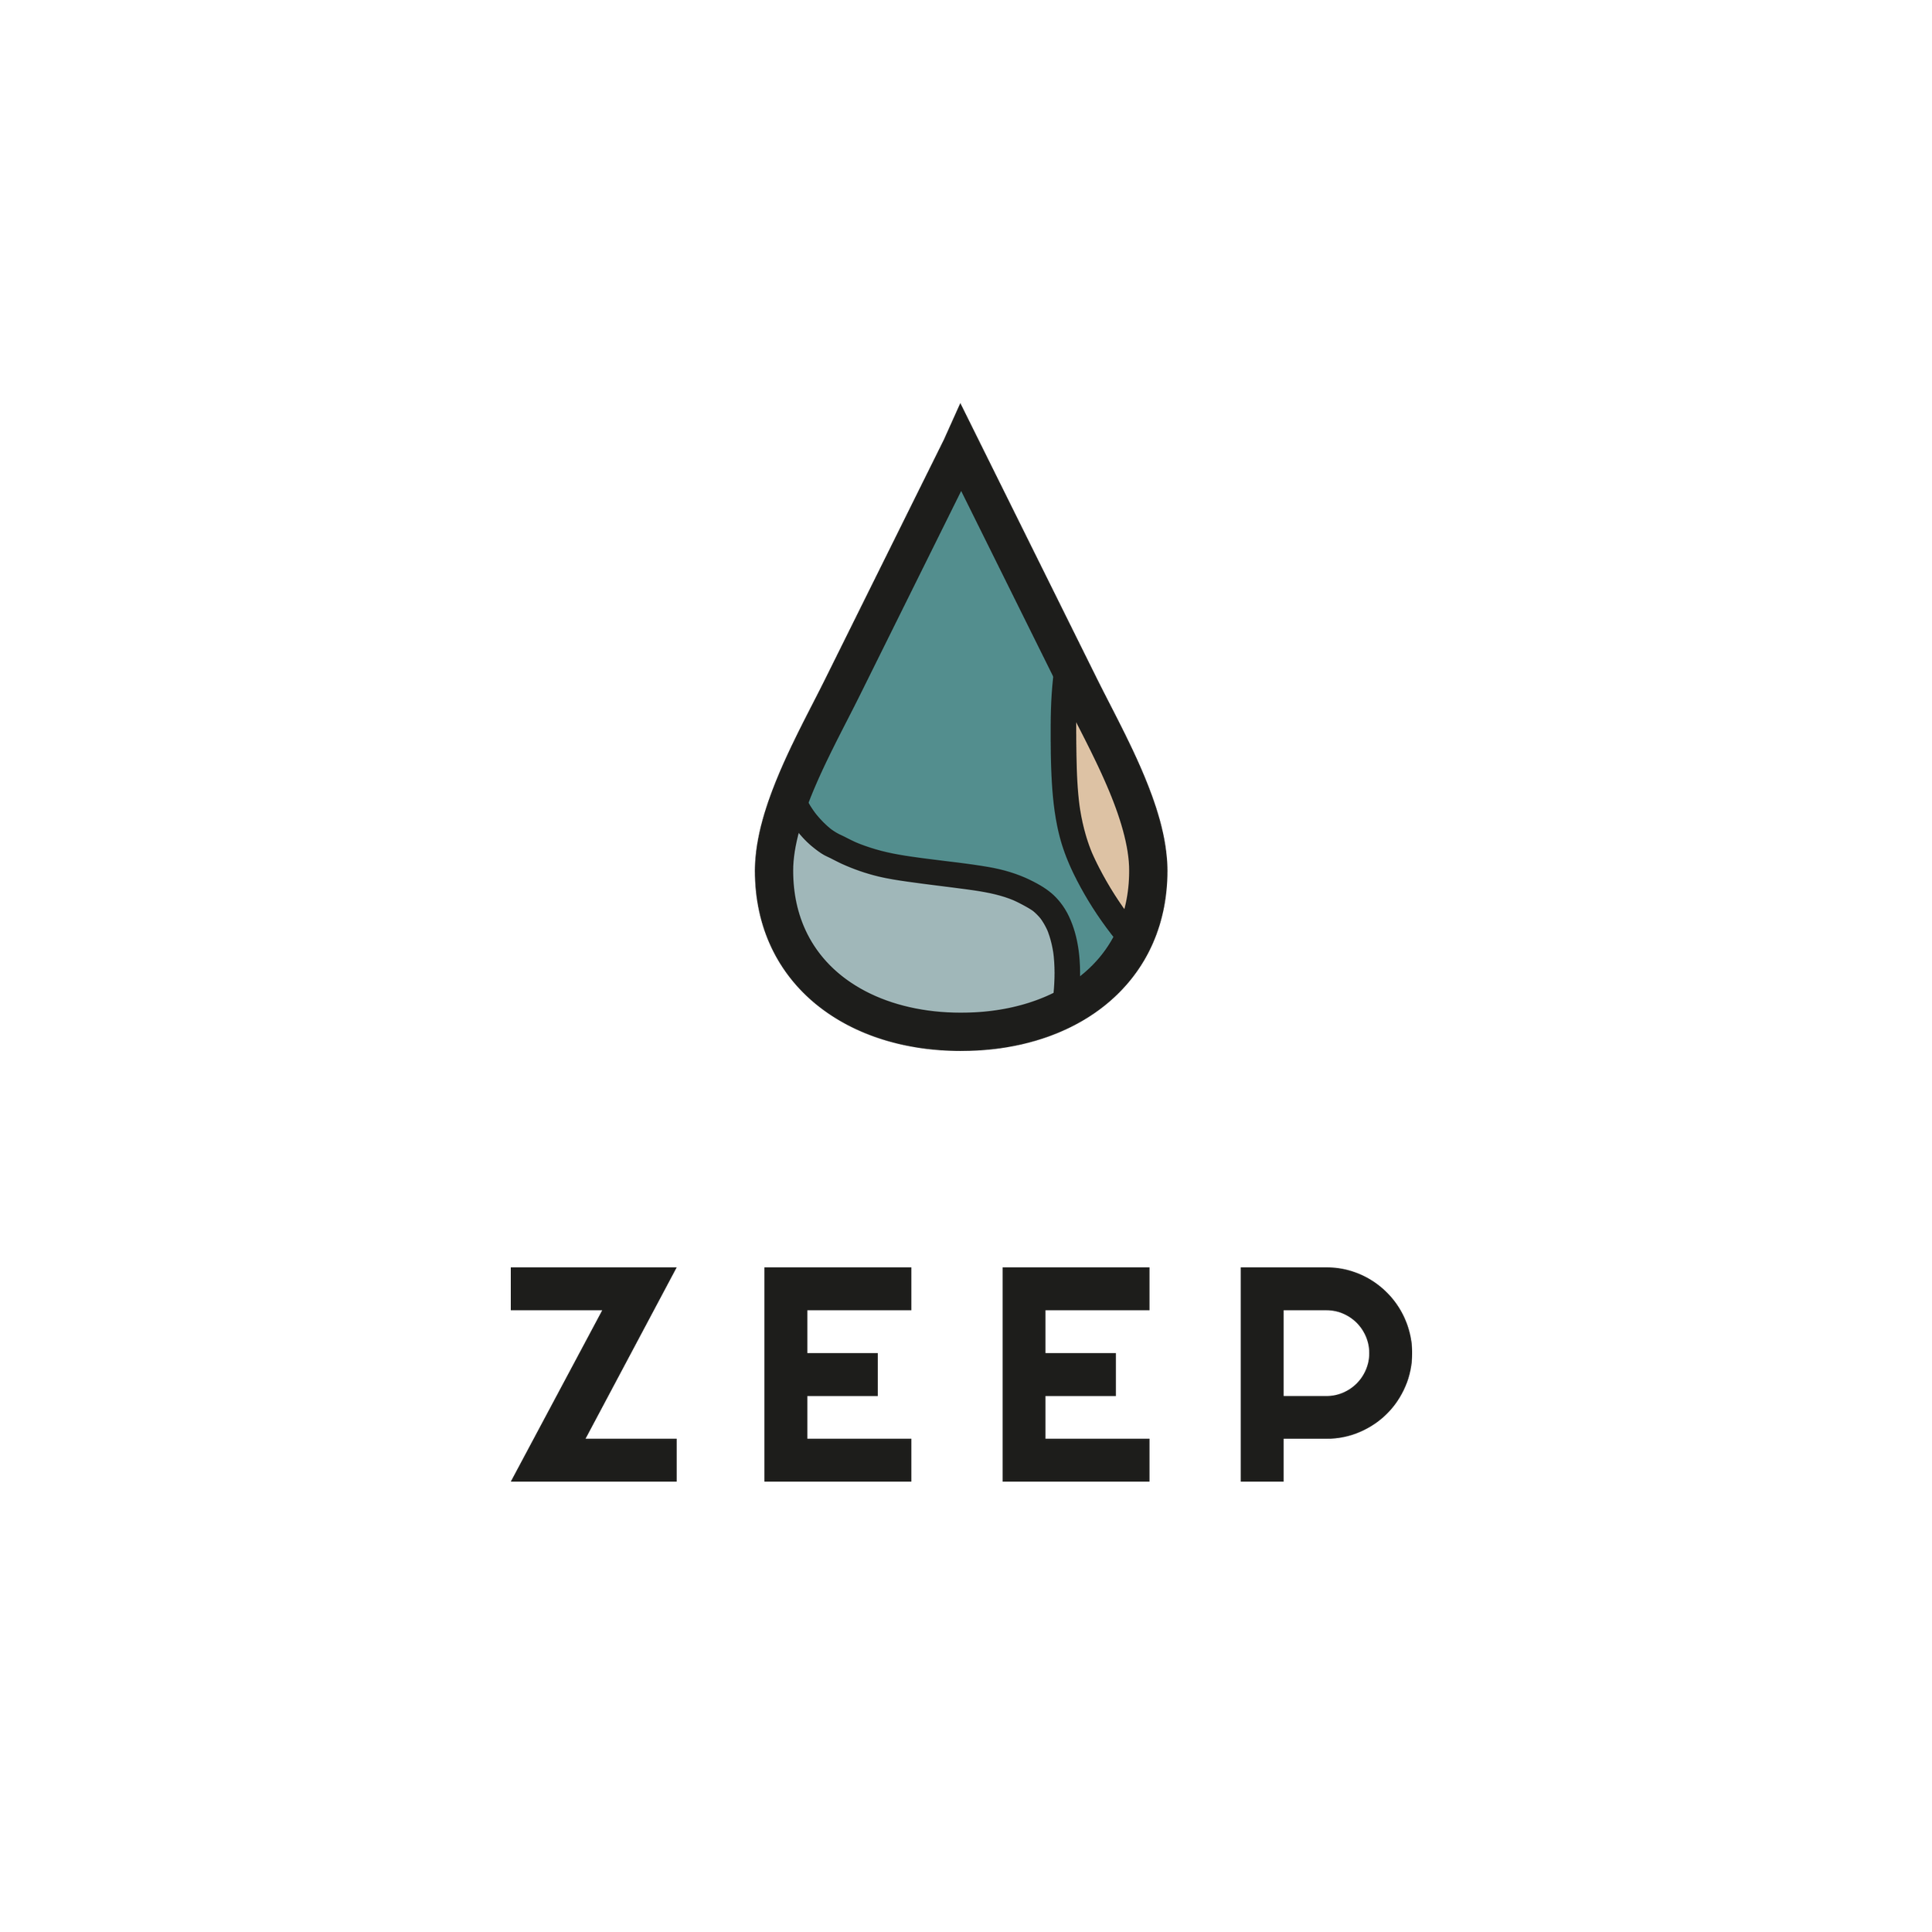   Zeep  by  Claire Heffer Design  